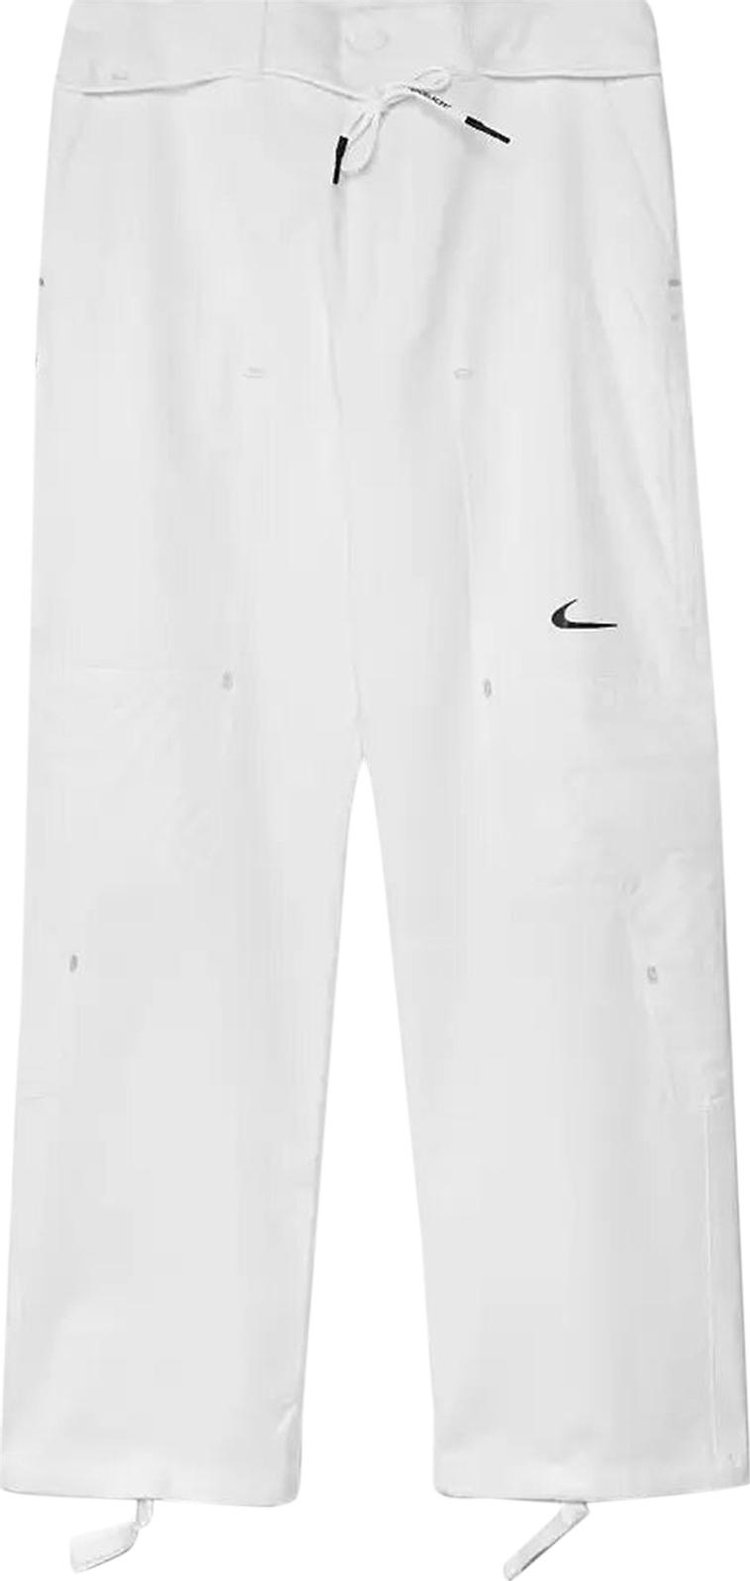 Buy Nike x Off-White Pant 'White' - CU2500 100 | GOAT